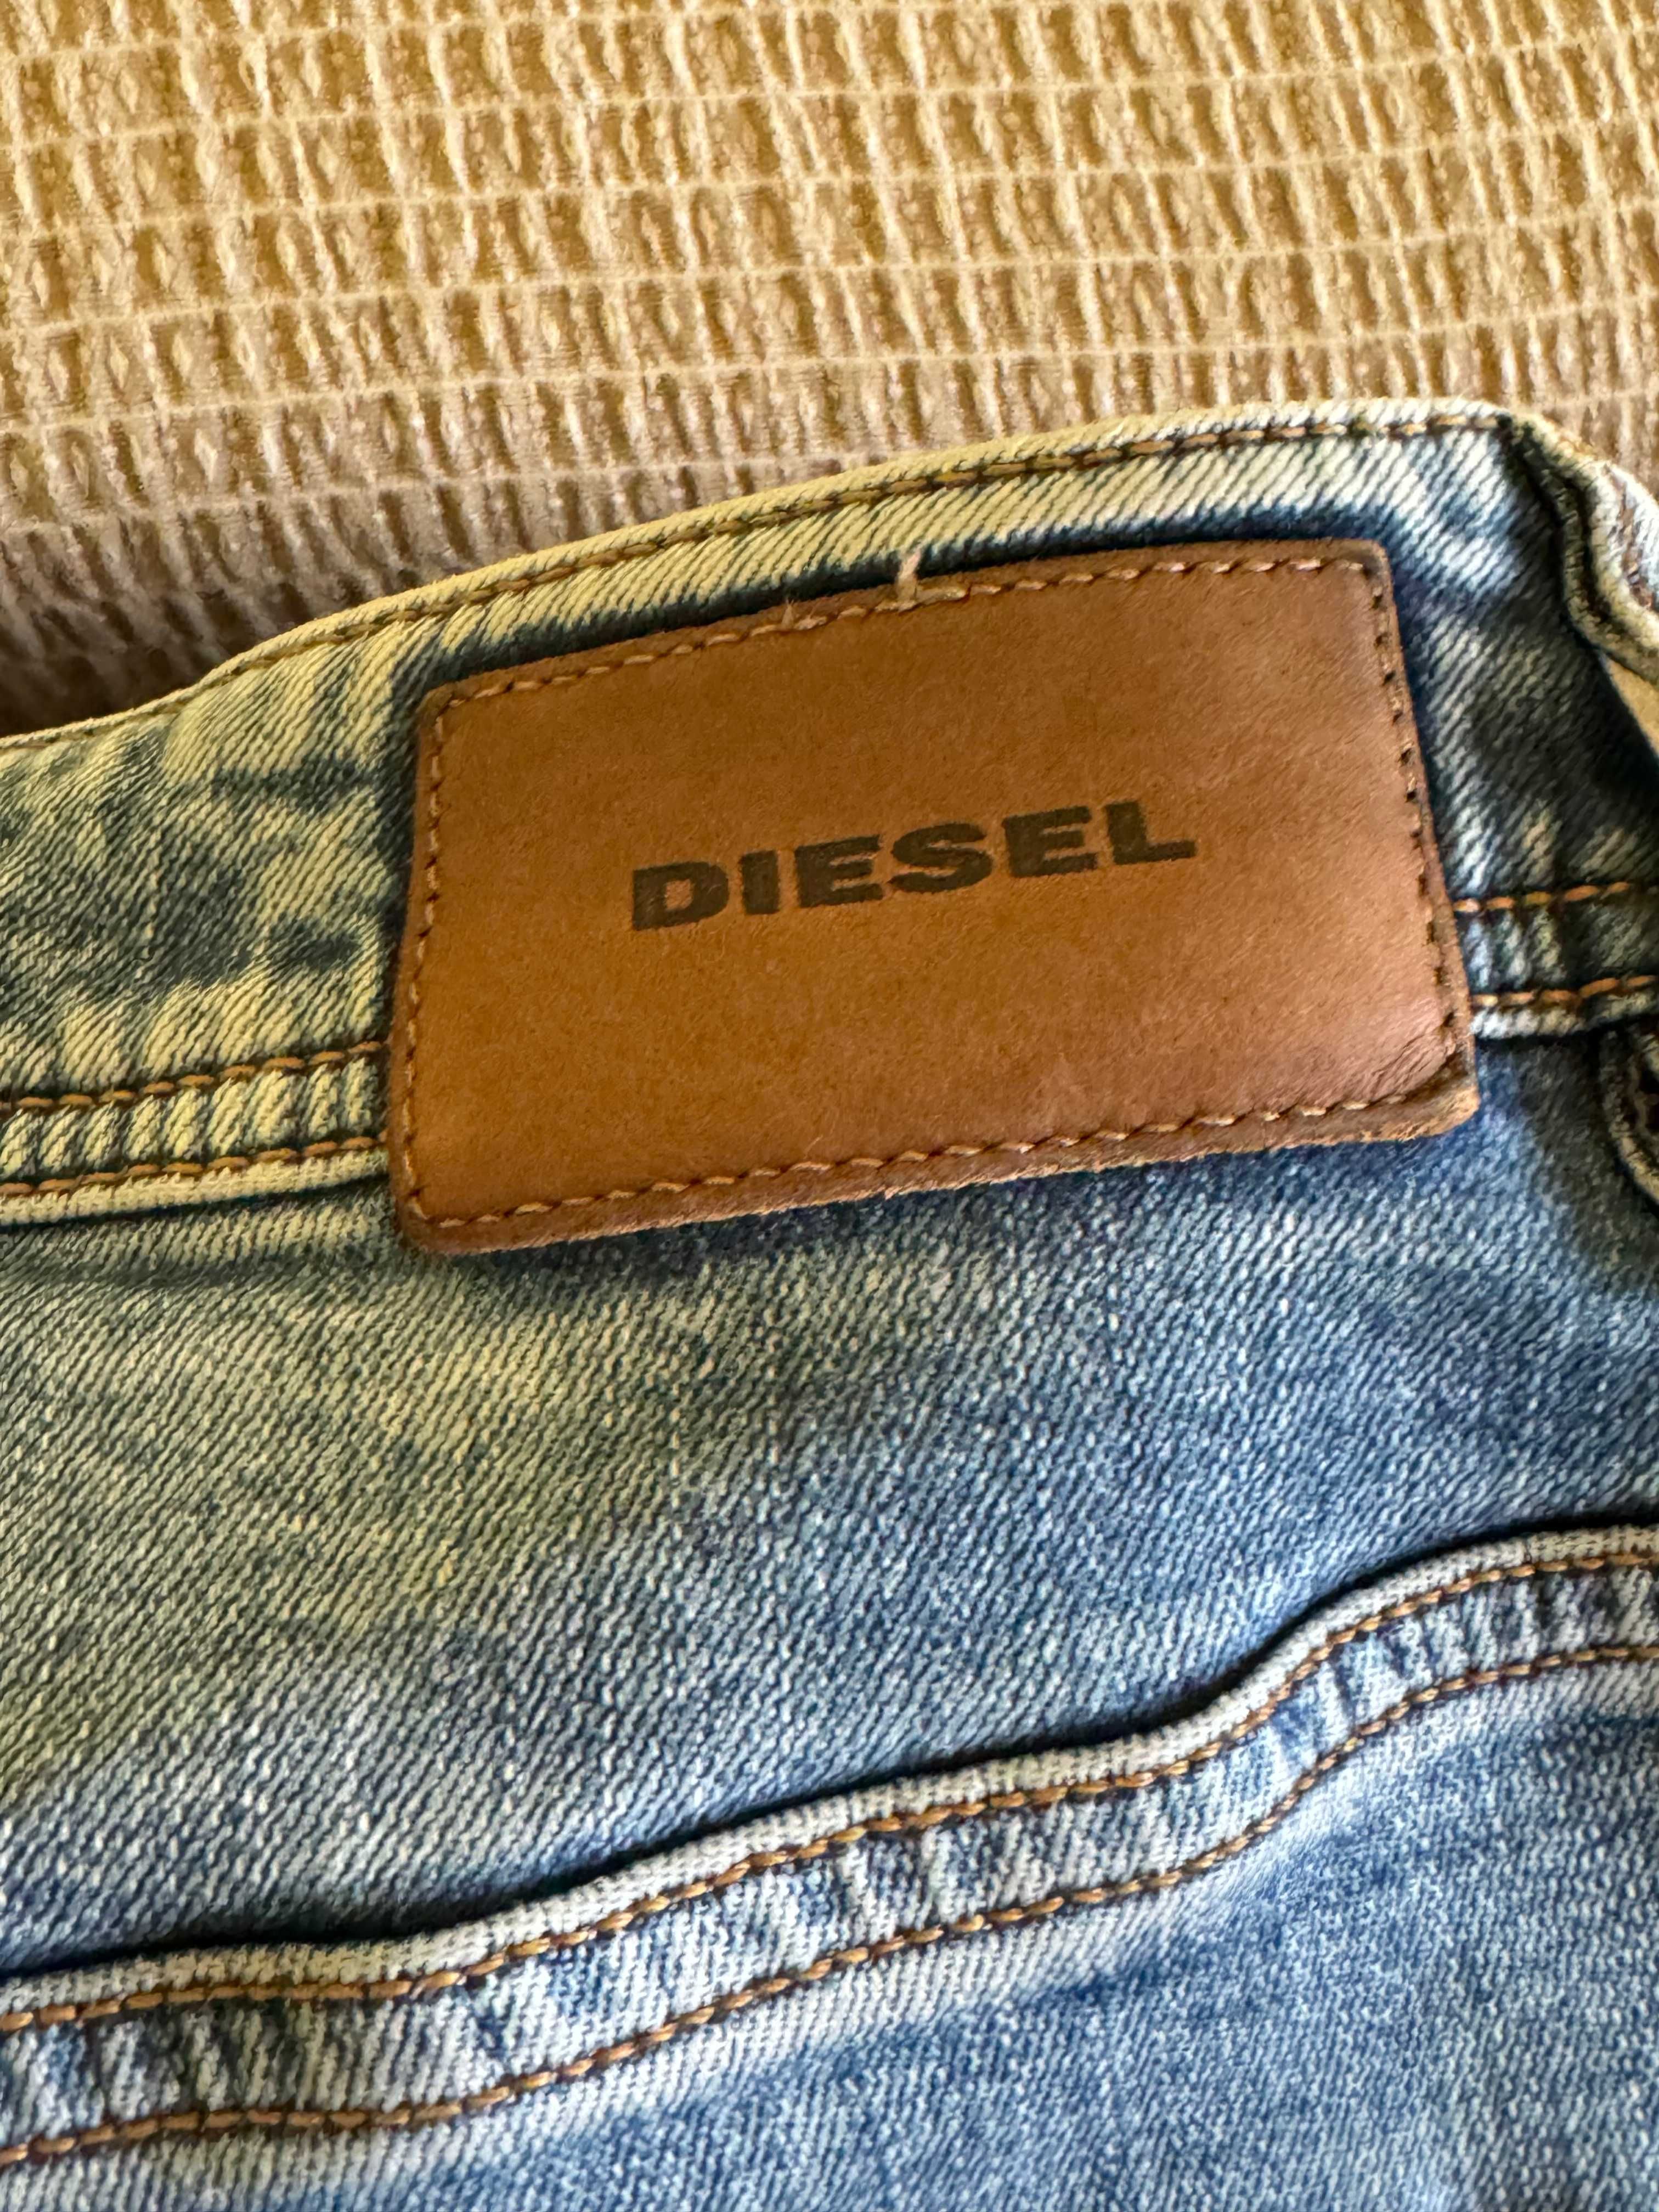 Blugi (blue jeans) Diesel